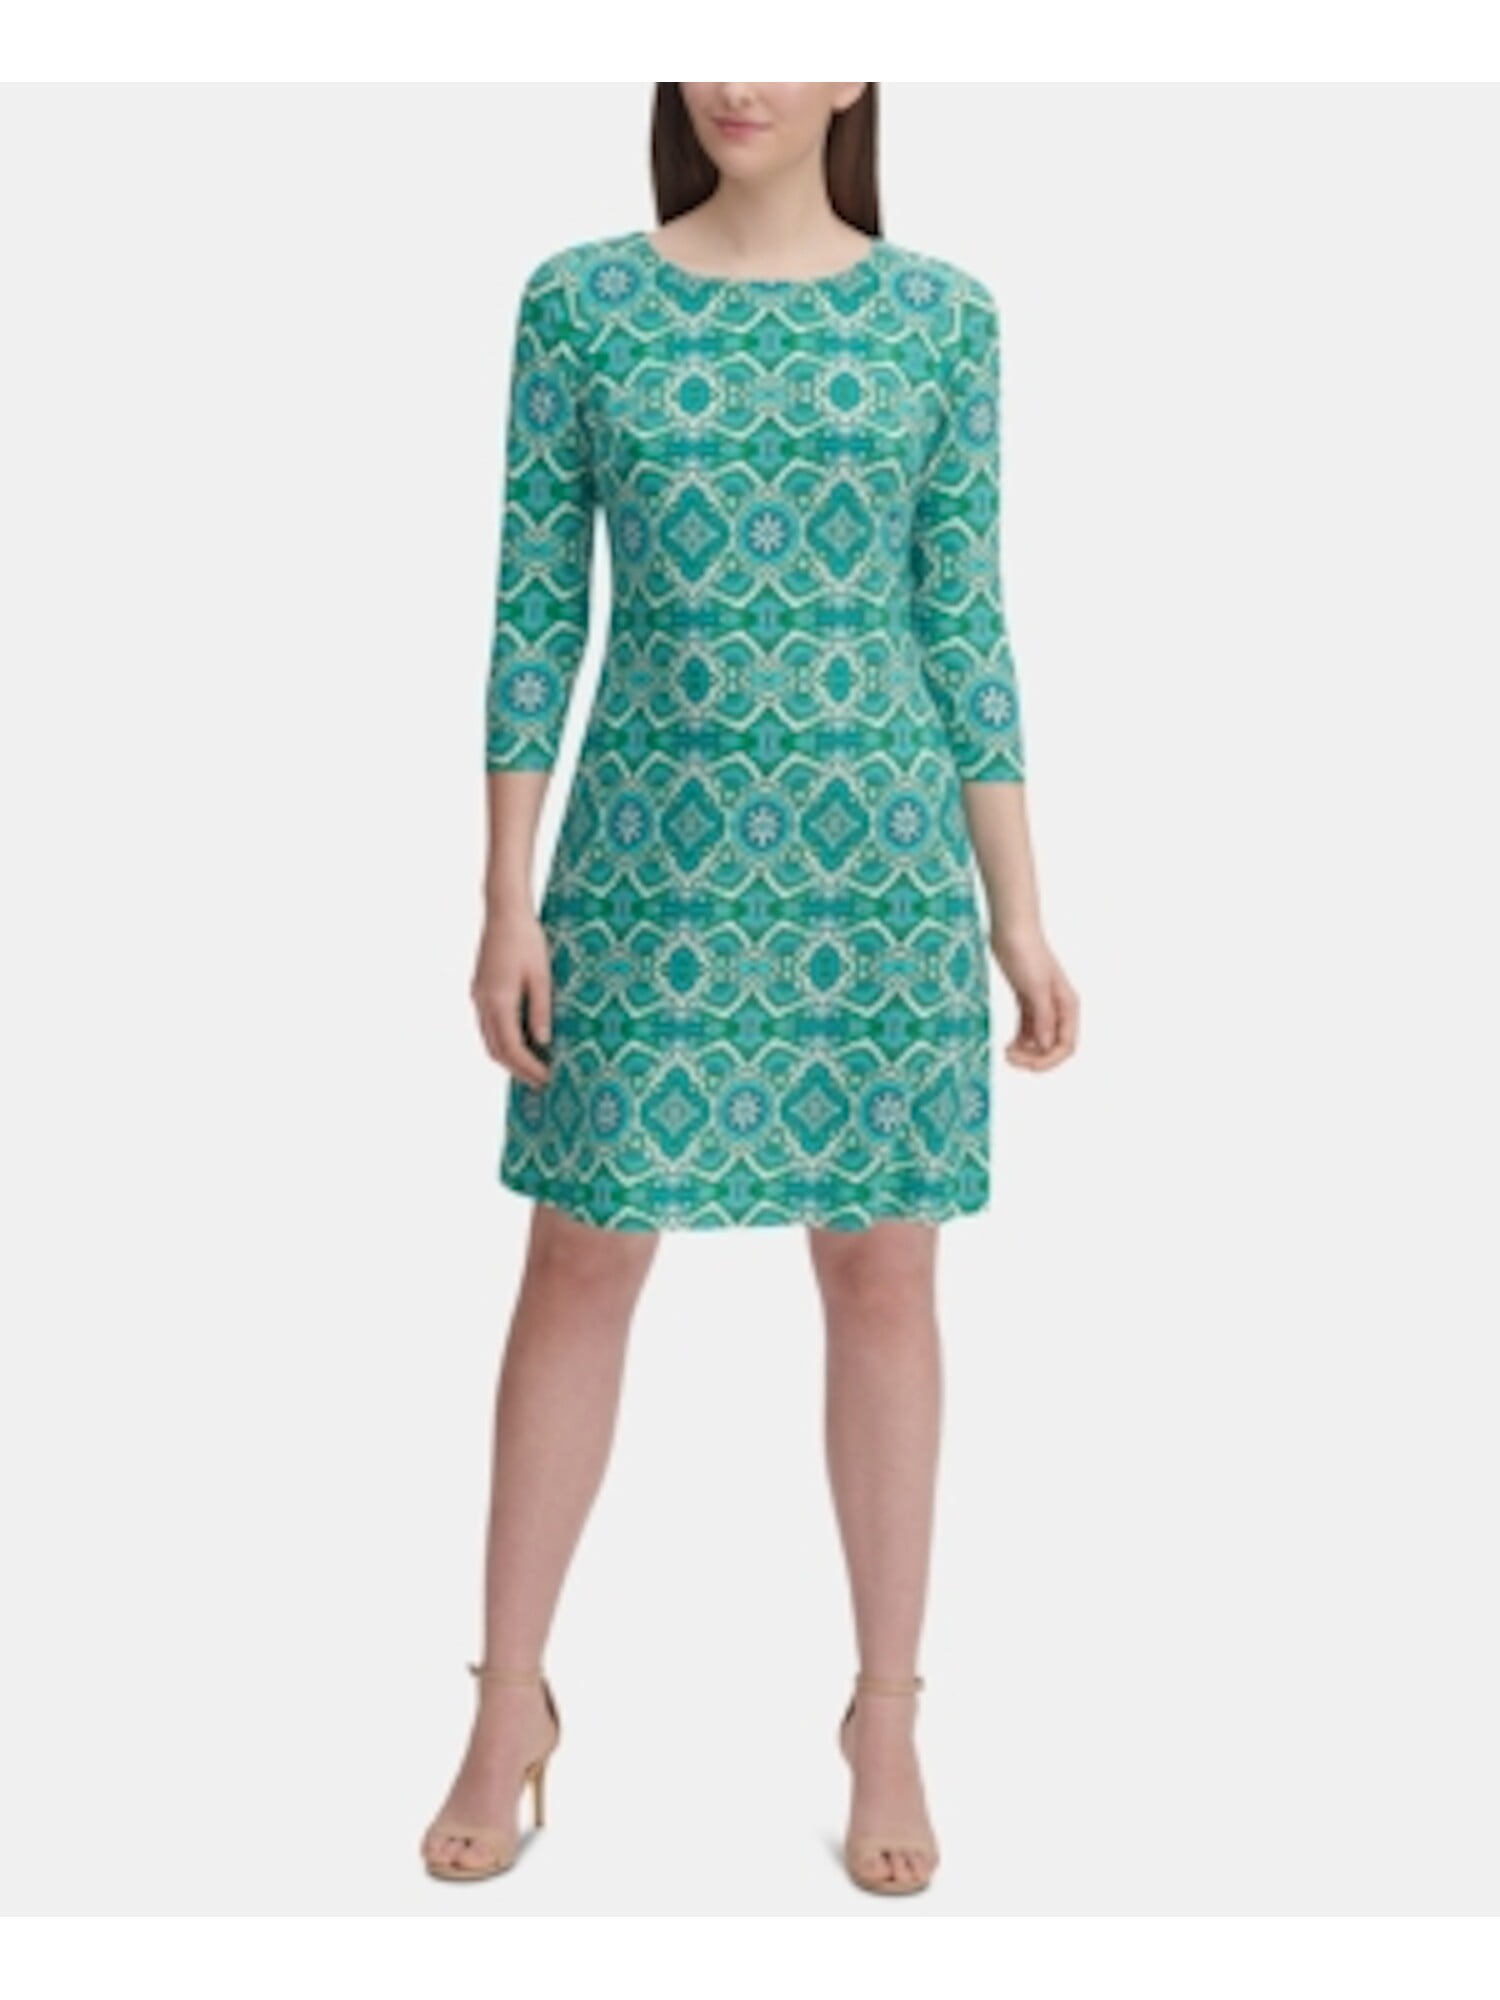 green dress size 18